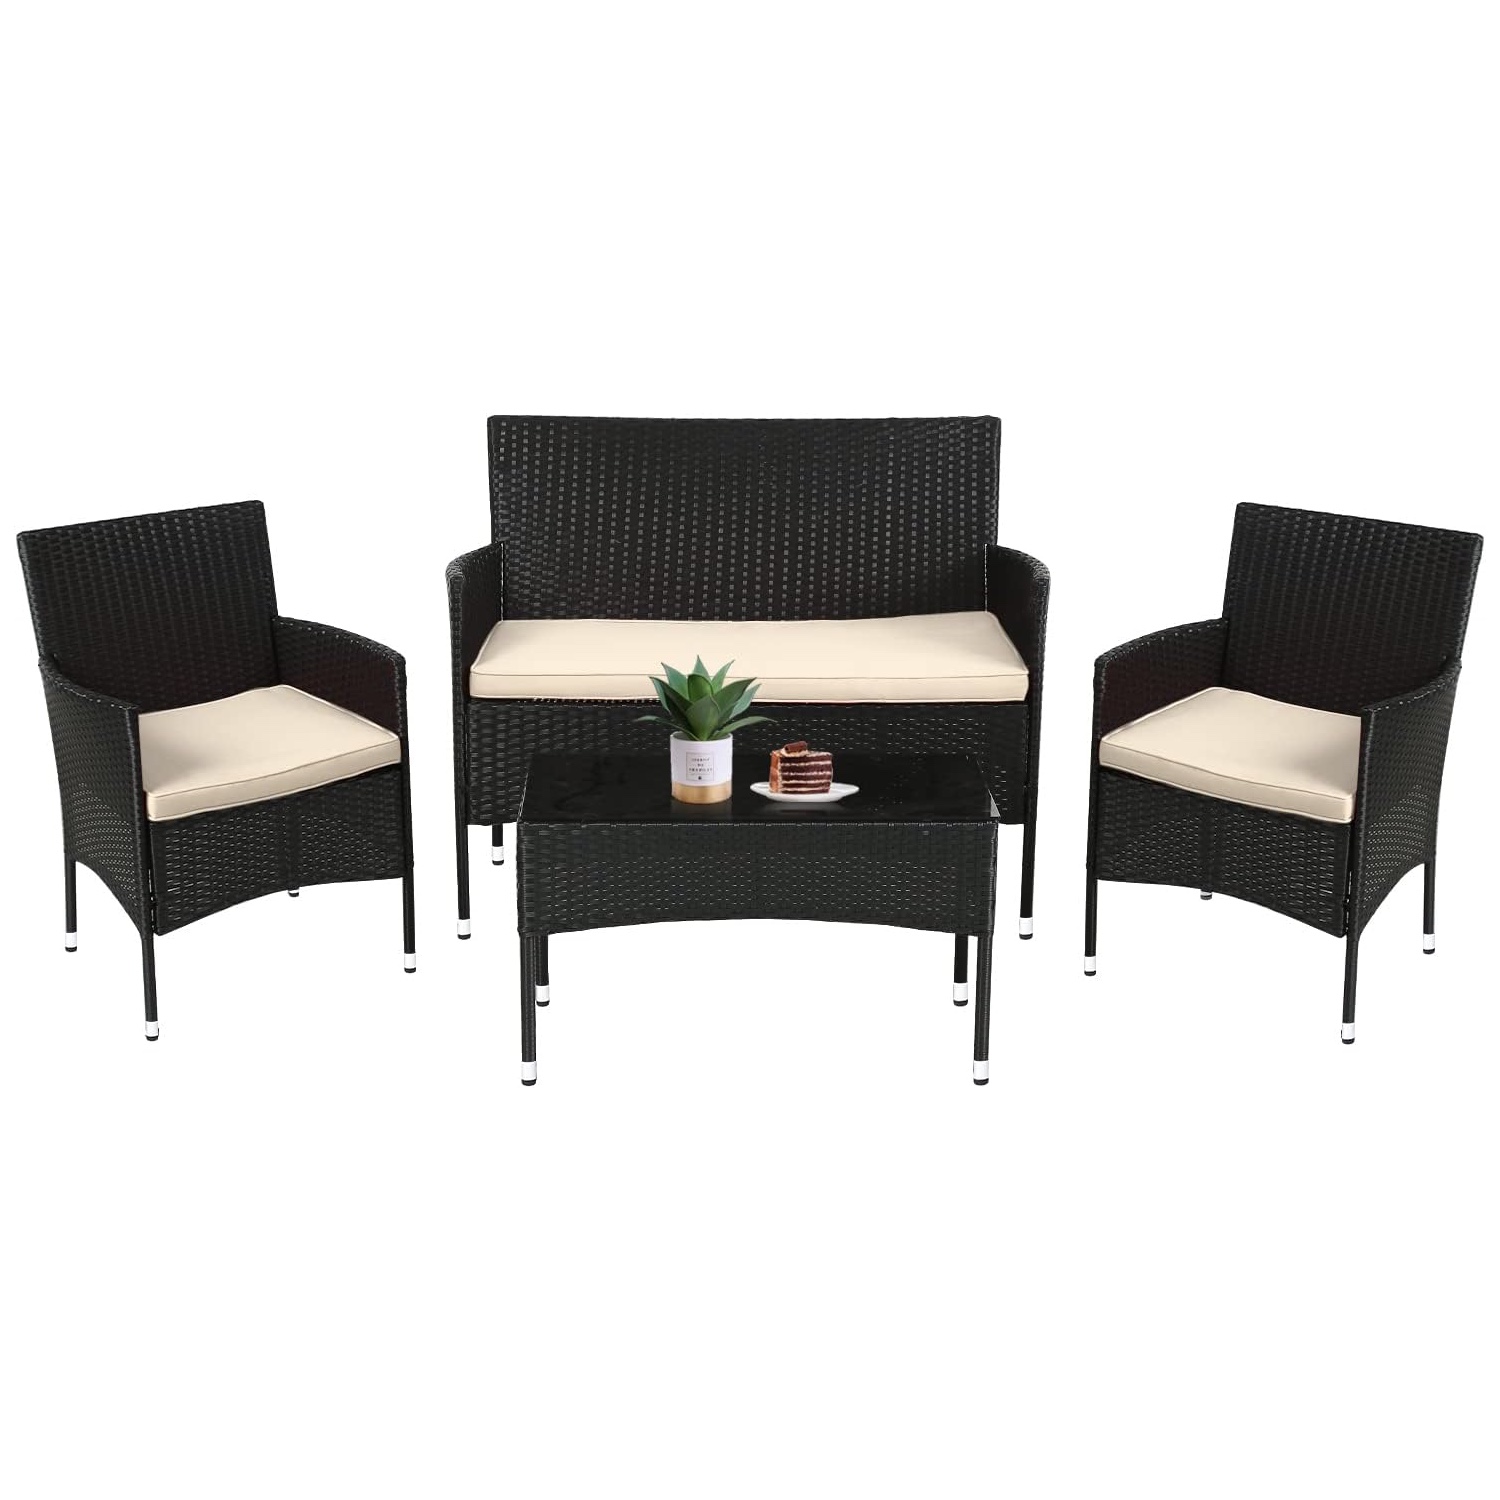 The Best Cheap Outdoor Patio Furniture Option: FDW 4-Piece Patio Furniture Set